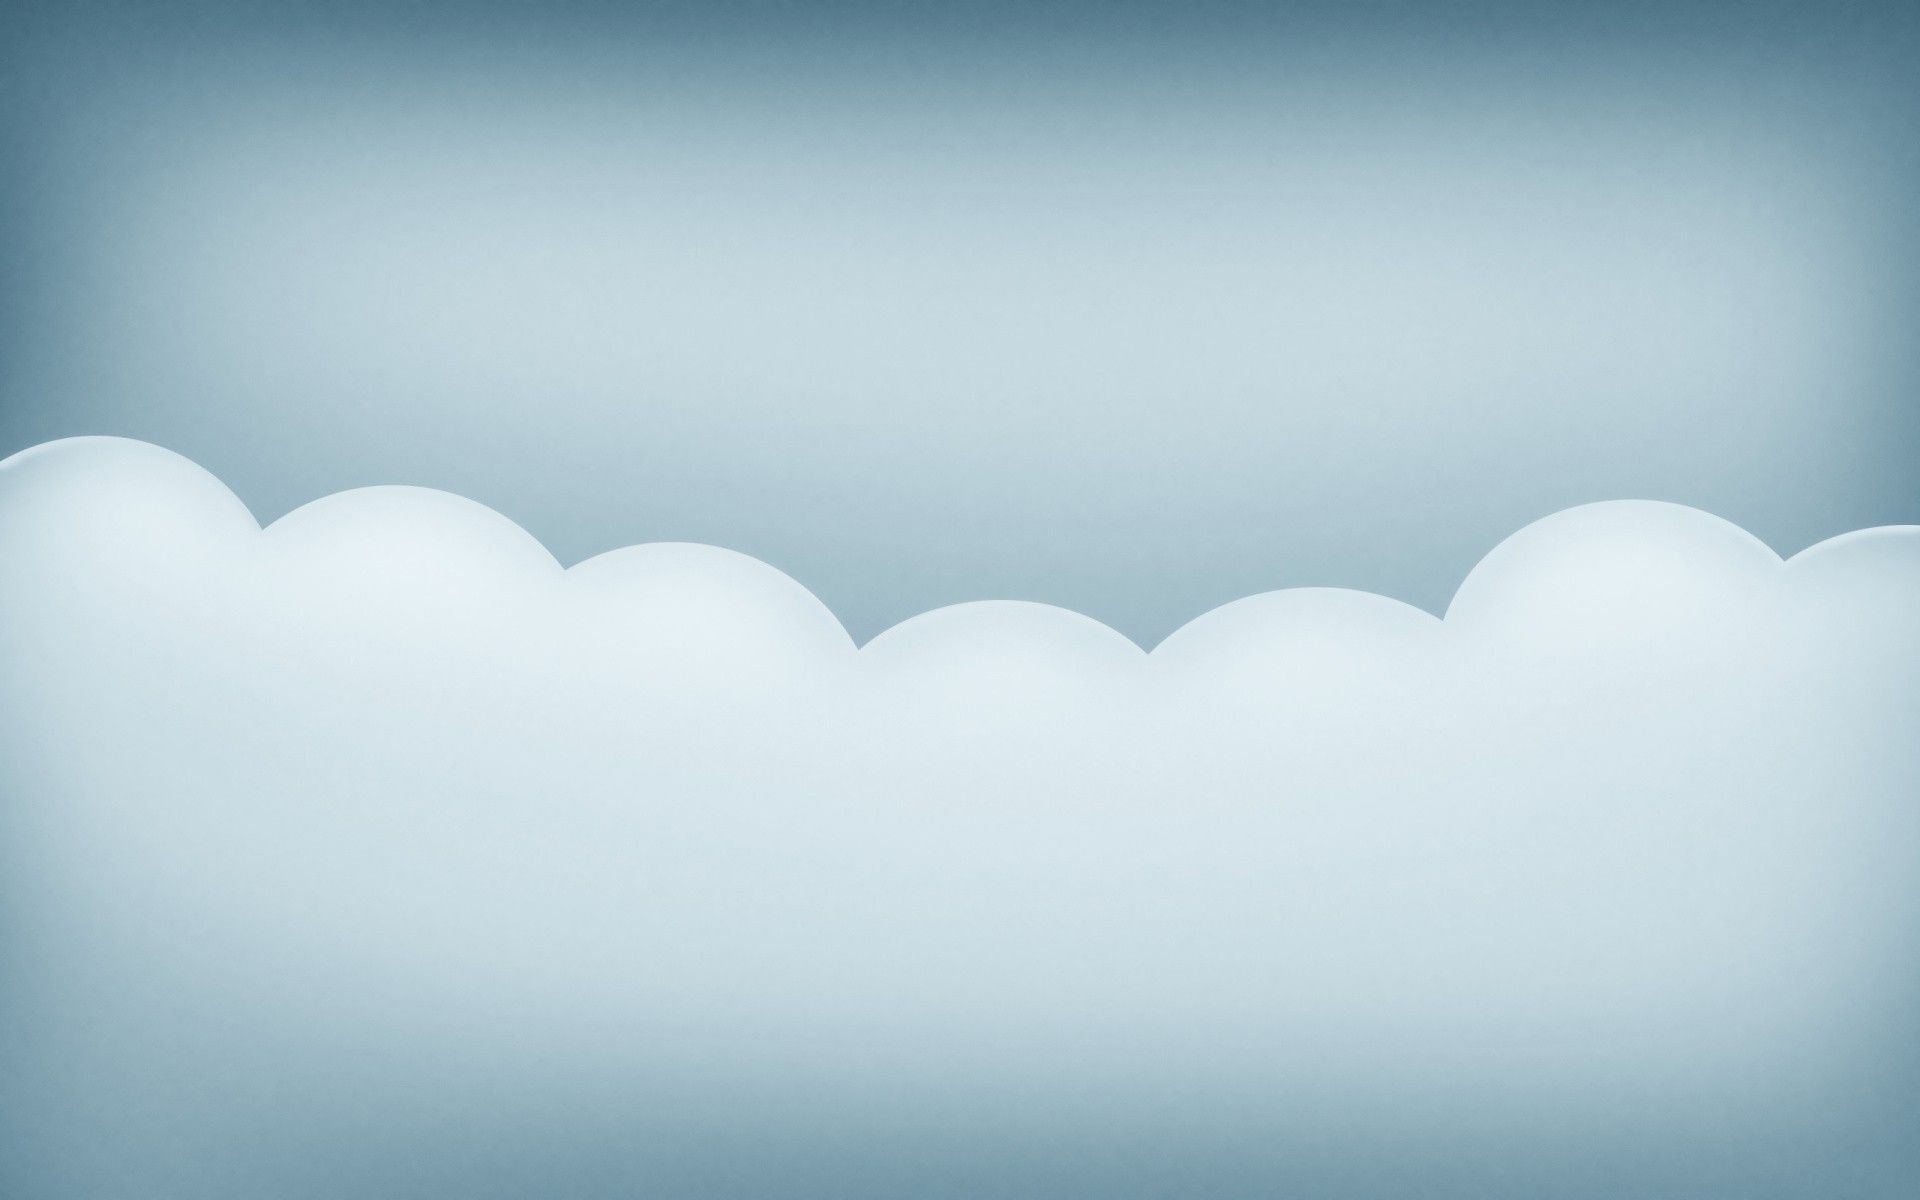 abstract-cartoon-cloud-art-backgrounds | Every Veteran Has a Story ...